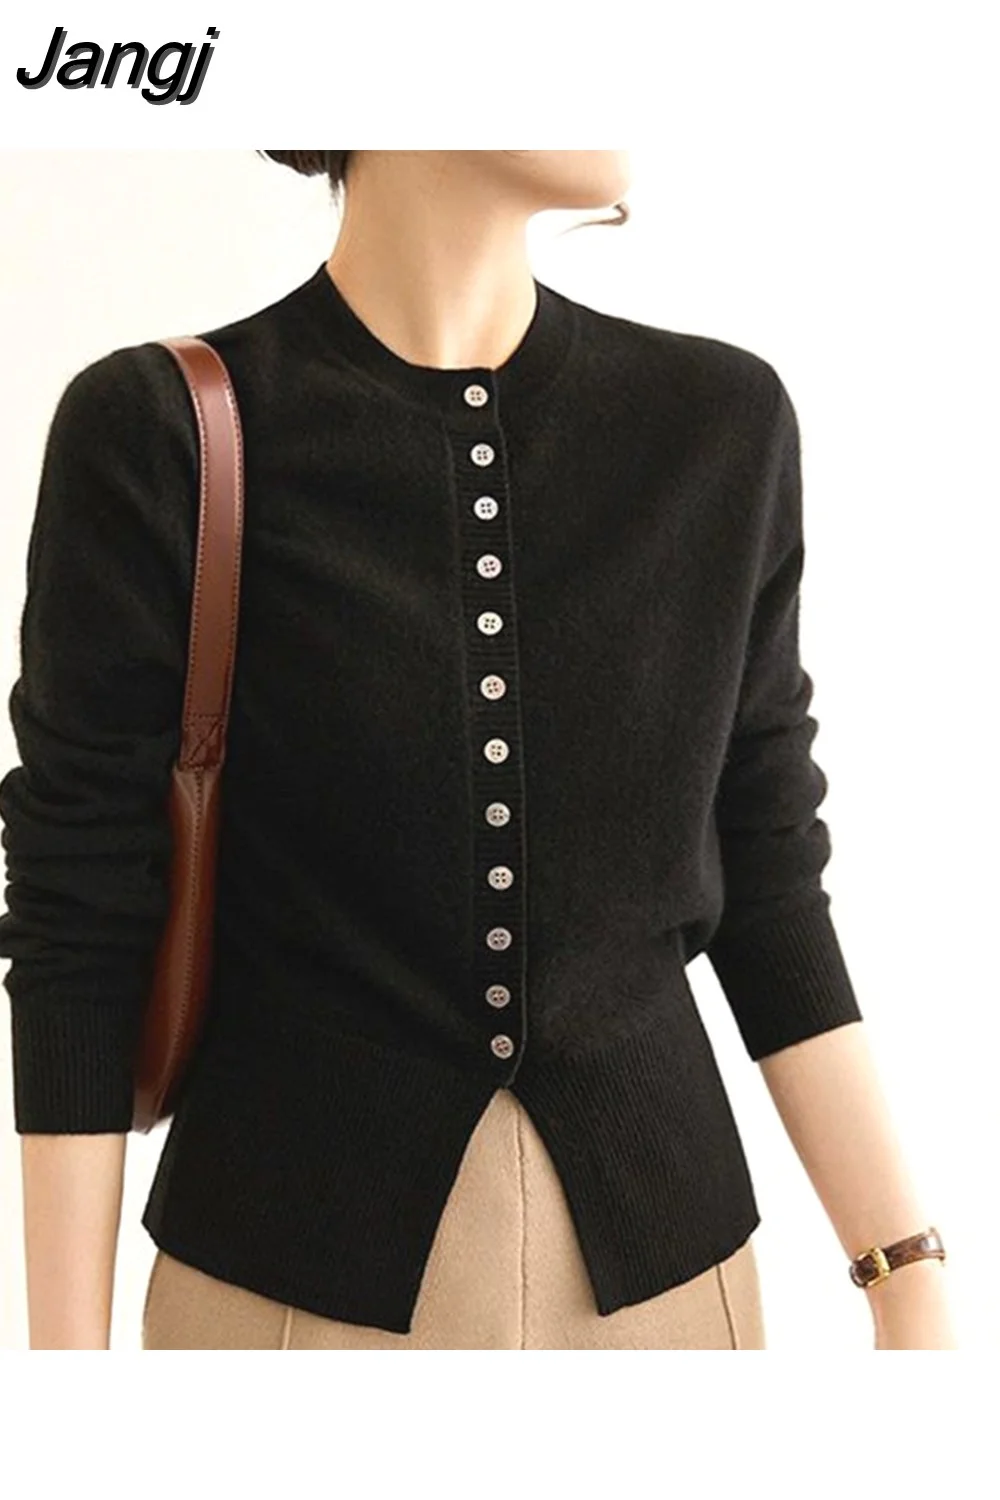 Jangj Winter Elegant Fashion Solid Simple Sweater Cardigan Top Women Long Sleeve All-match Buttons Coat Ladies Knitting Jacket 1020-0